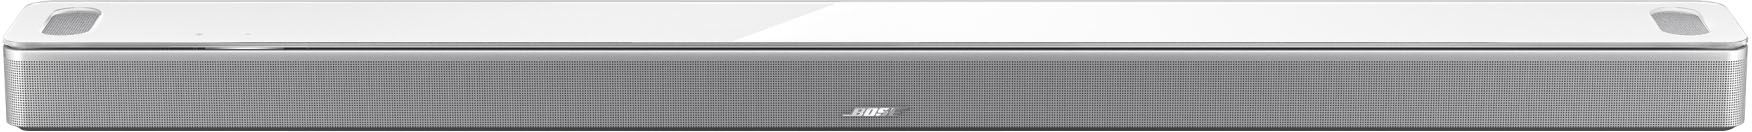 Bose Smart Ultra Soundbar - LFL Audio